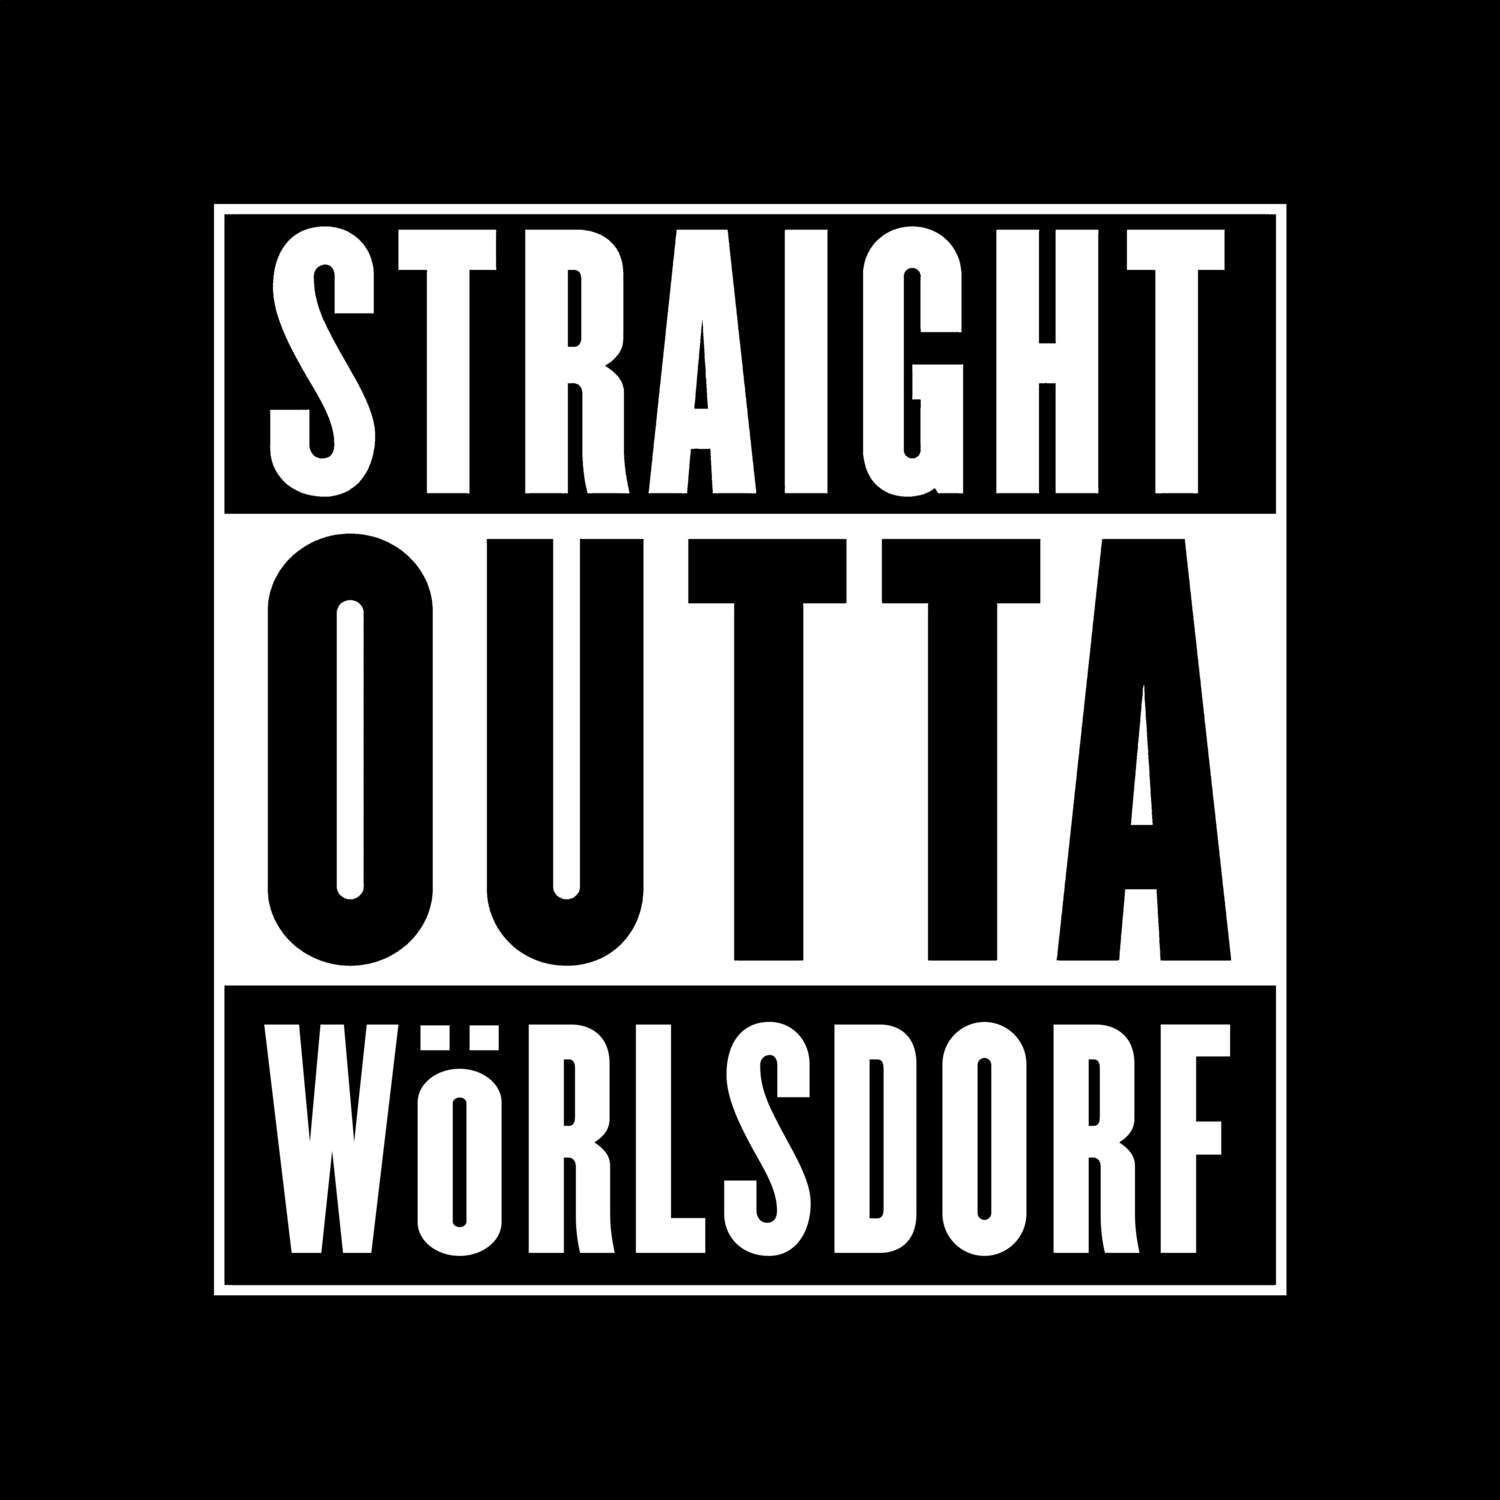 Wörlsdorf T-Shirt »Straight Outta«